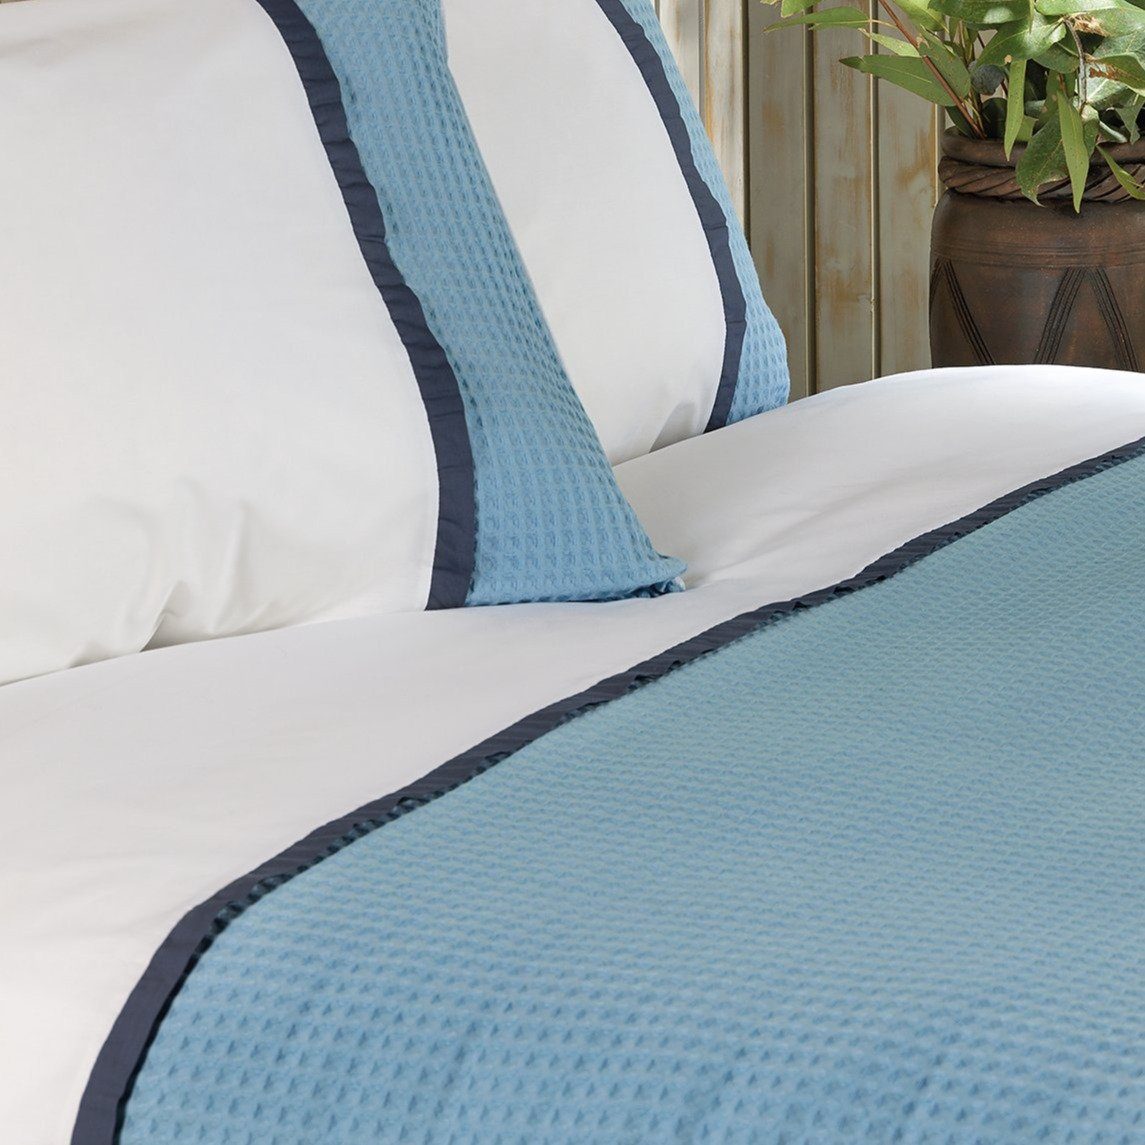 Schepsel compenseren regenval Hotel kwaliteit dekbedovertrek wit/blauw – CASA DORMI